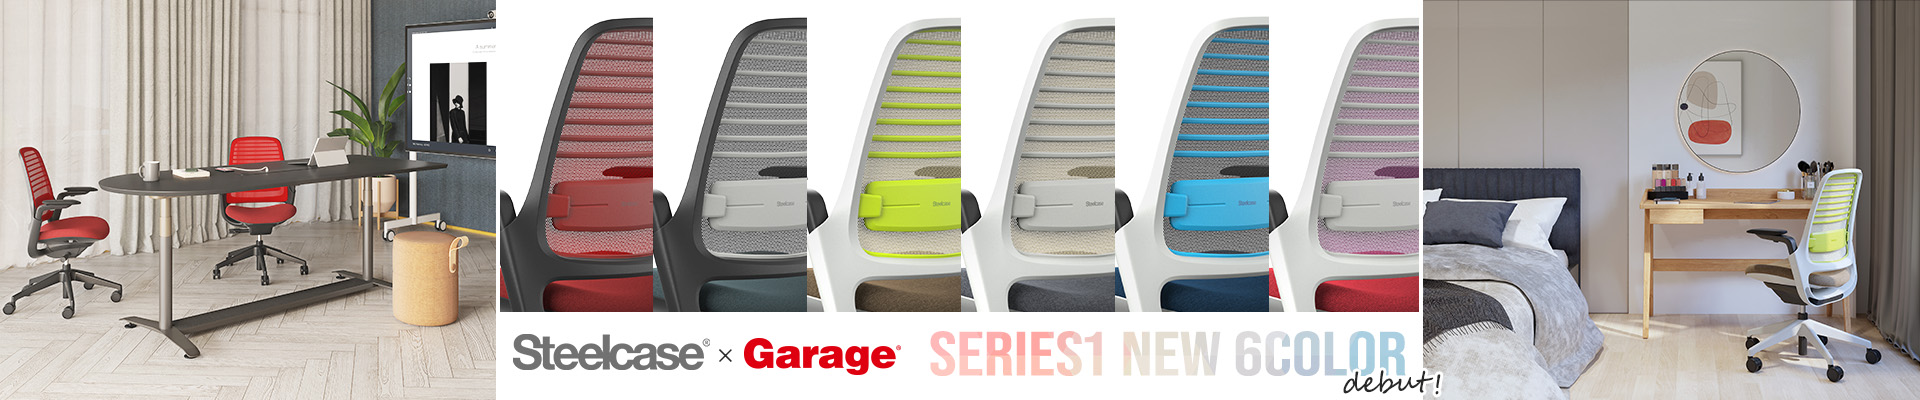 Series1 Steelcase Garage セレクトカラー